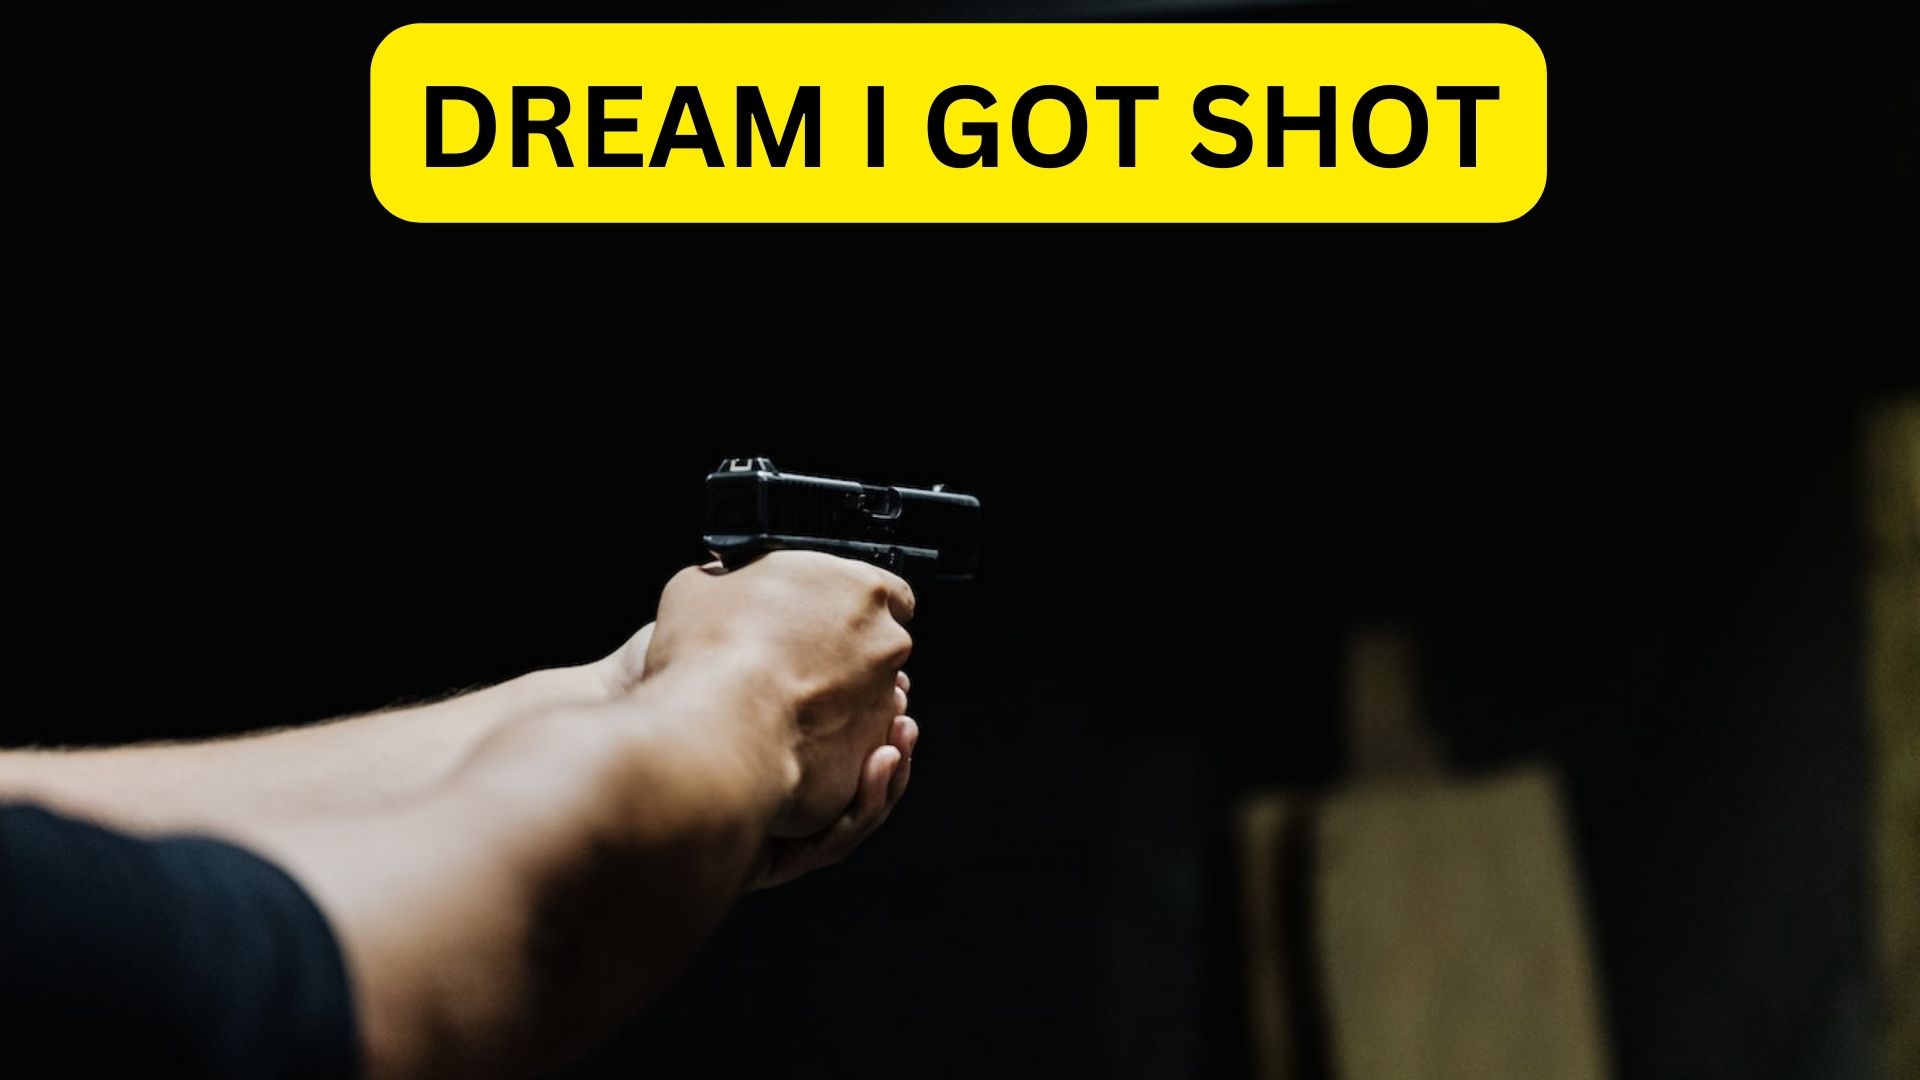 Dream I Got Shot - An Unpleasant And Disturbing Experience